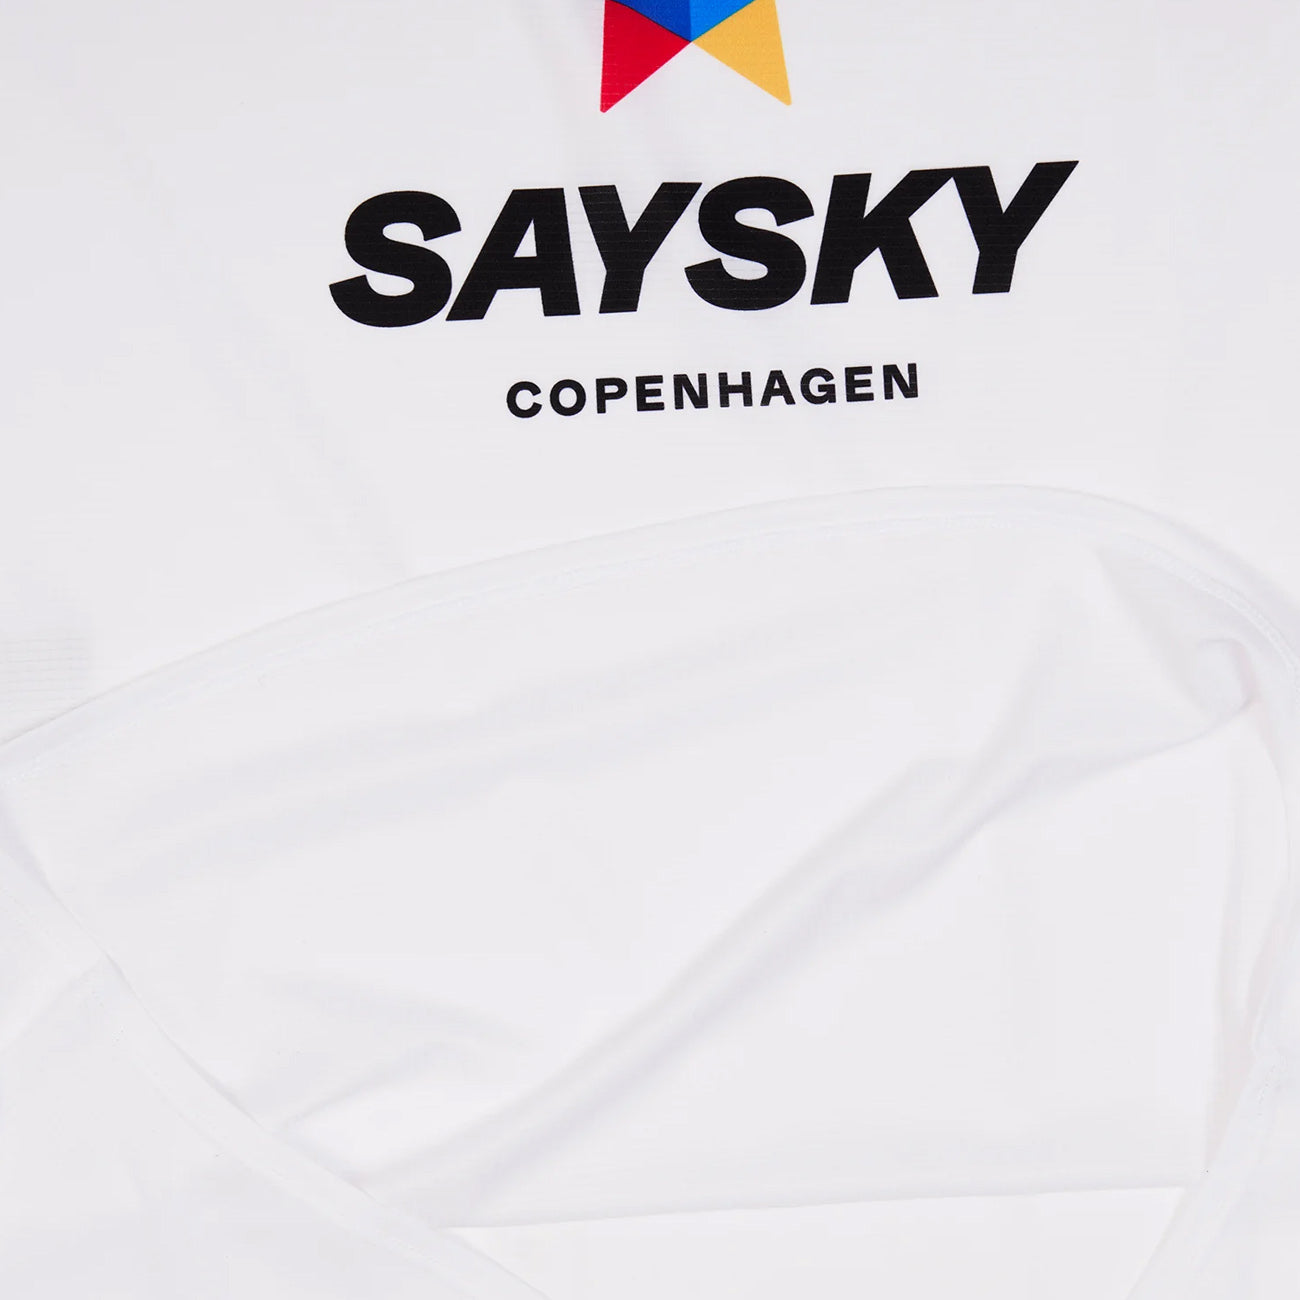 Saysky Wmns Heritage Flow T-Shirt Damen White